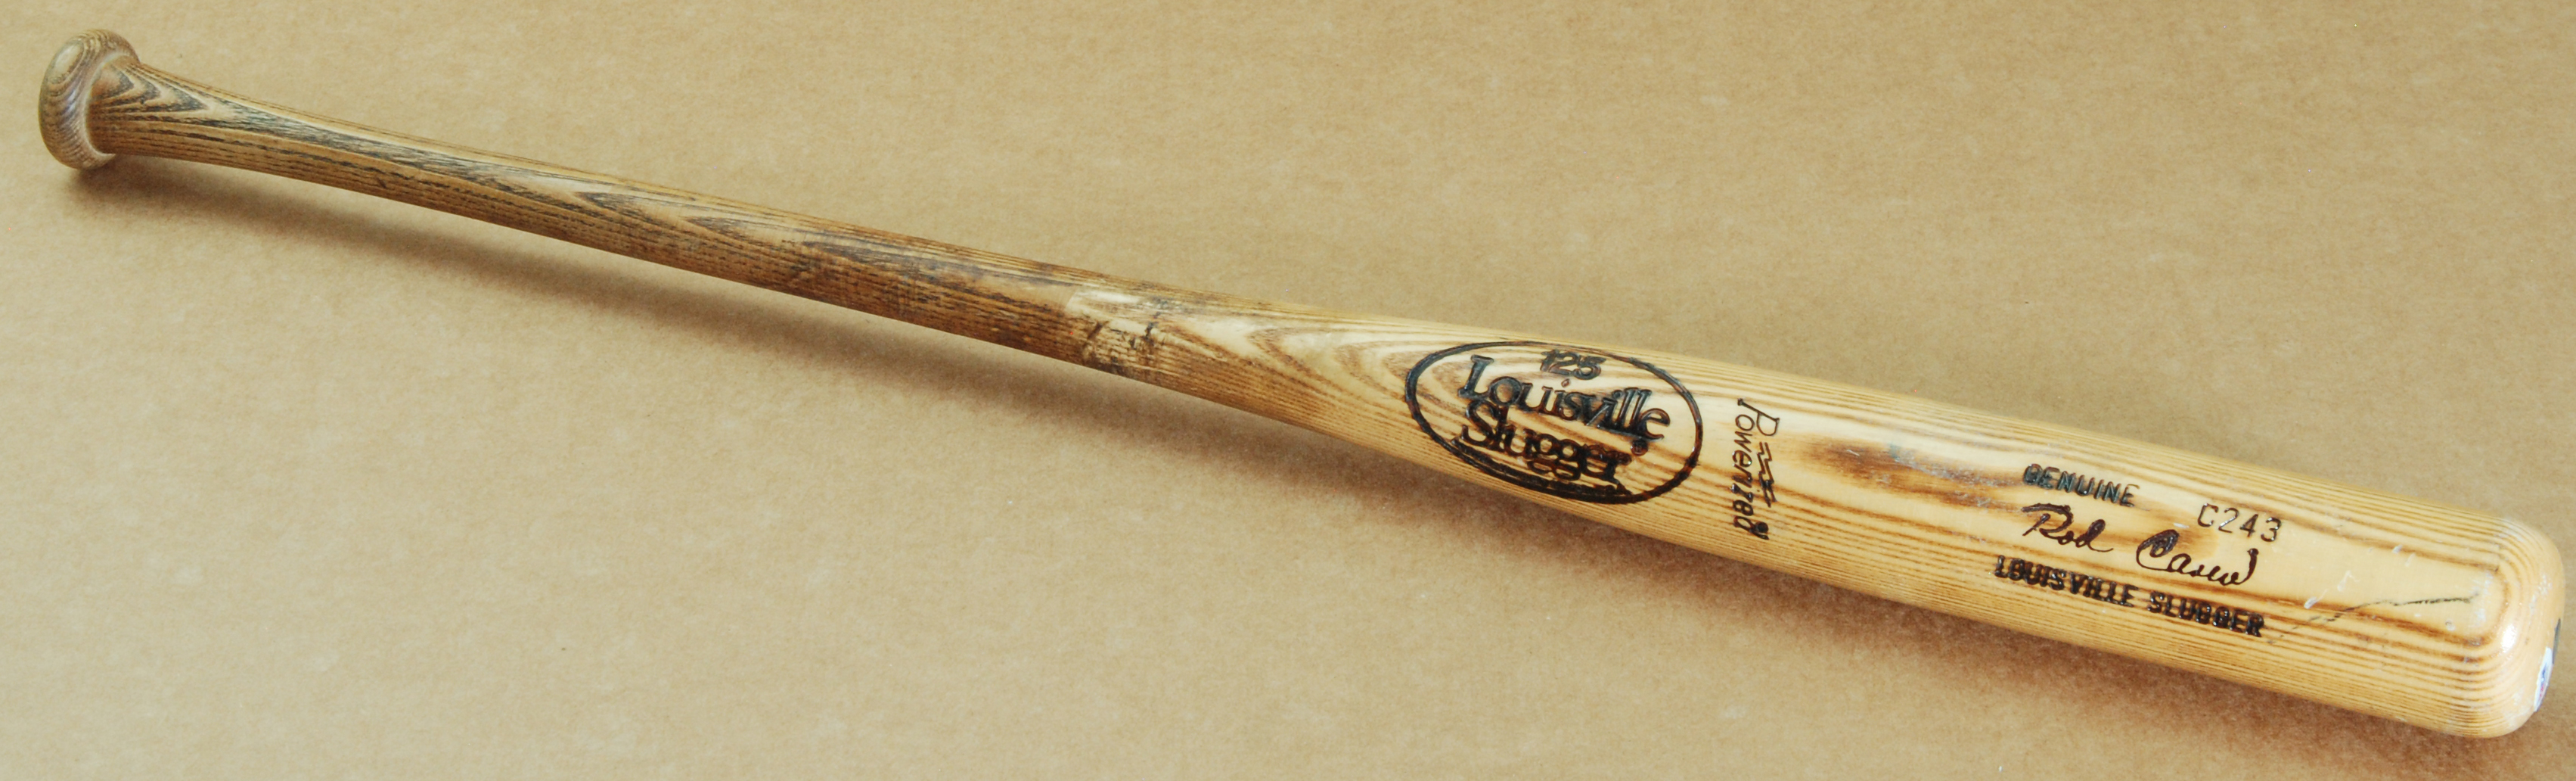 Lot Detail - Rod Carew 1983-85 Game-Used Louisville Slugger Bat